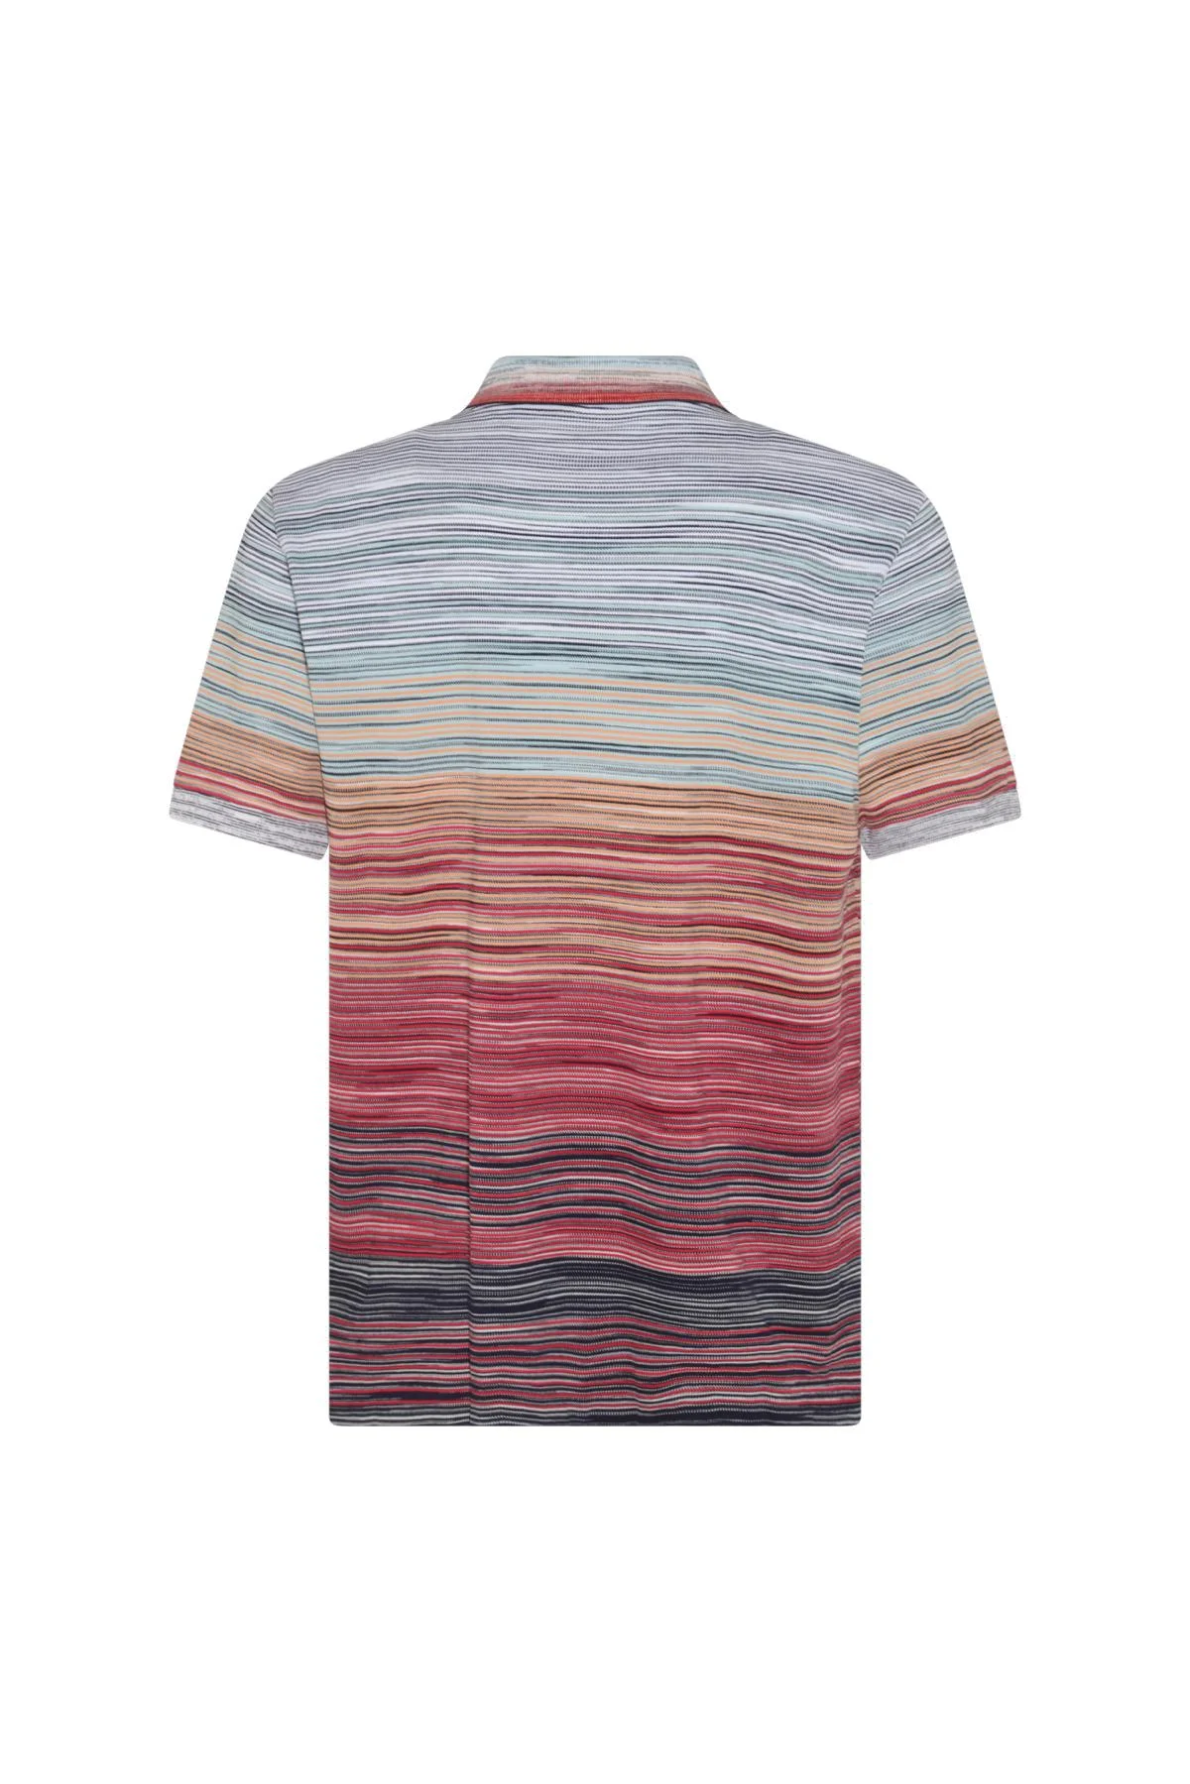 Missoni Men’s Knitted Stripe Polo Shirt Multicoloured - Back View